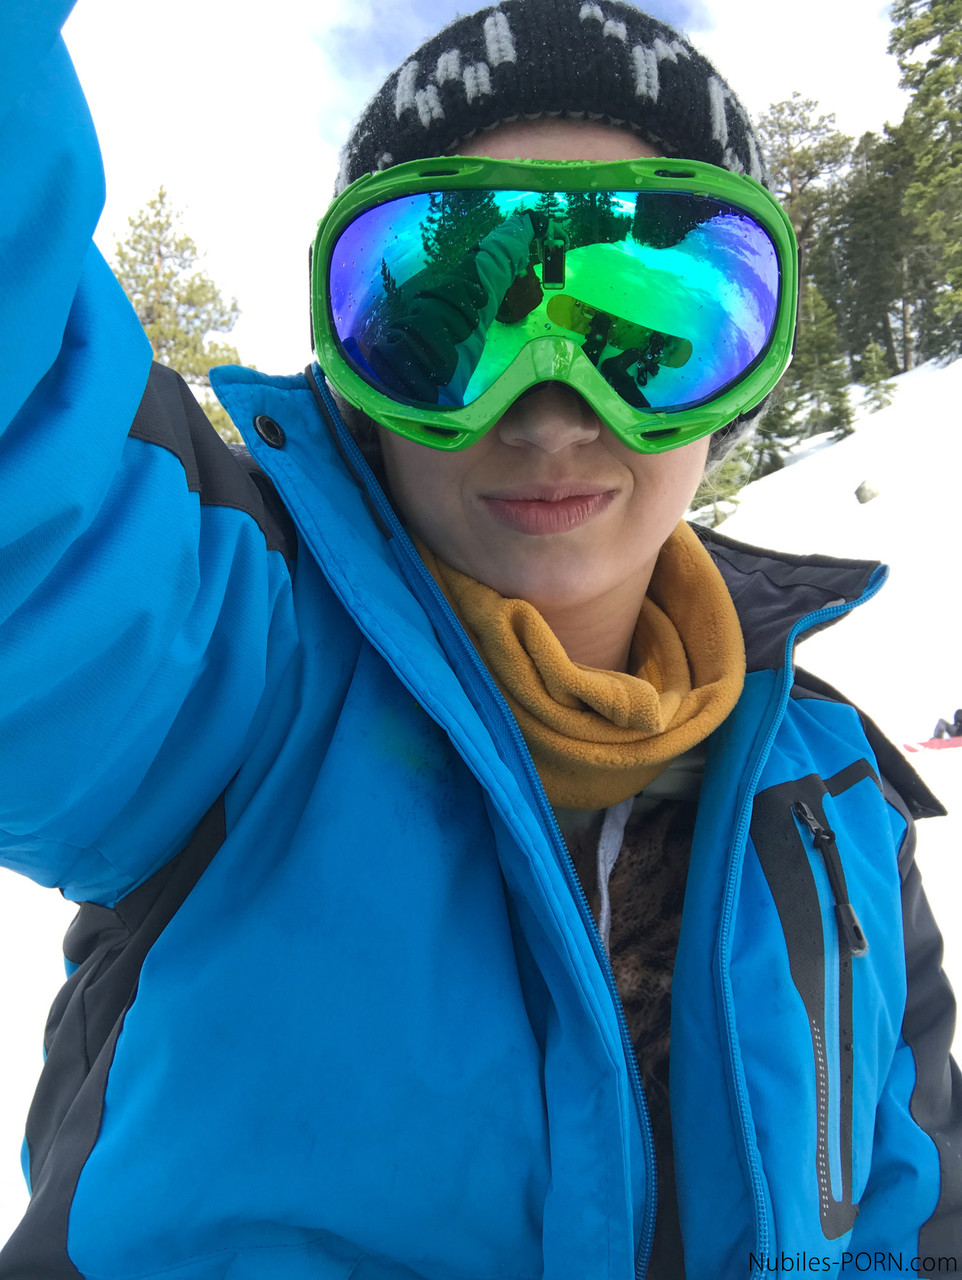 Sexy snowboarders Sierra Nicole & Kristen Scott have pre-FFM fun on the slopes 色情照片 #427844878 | Nubiles Porn Pics, Kristen Scott, Sierra Nicole, Blonde, 手机色情